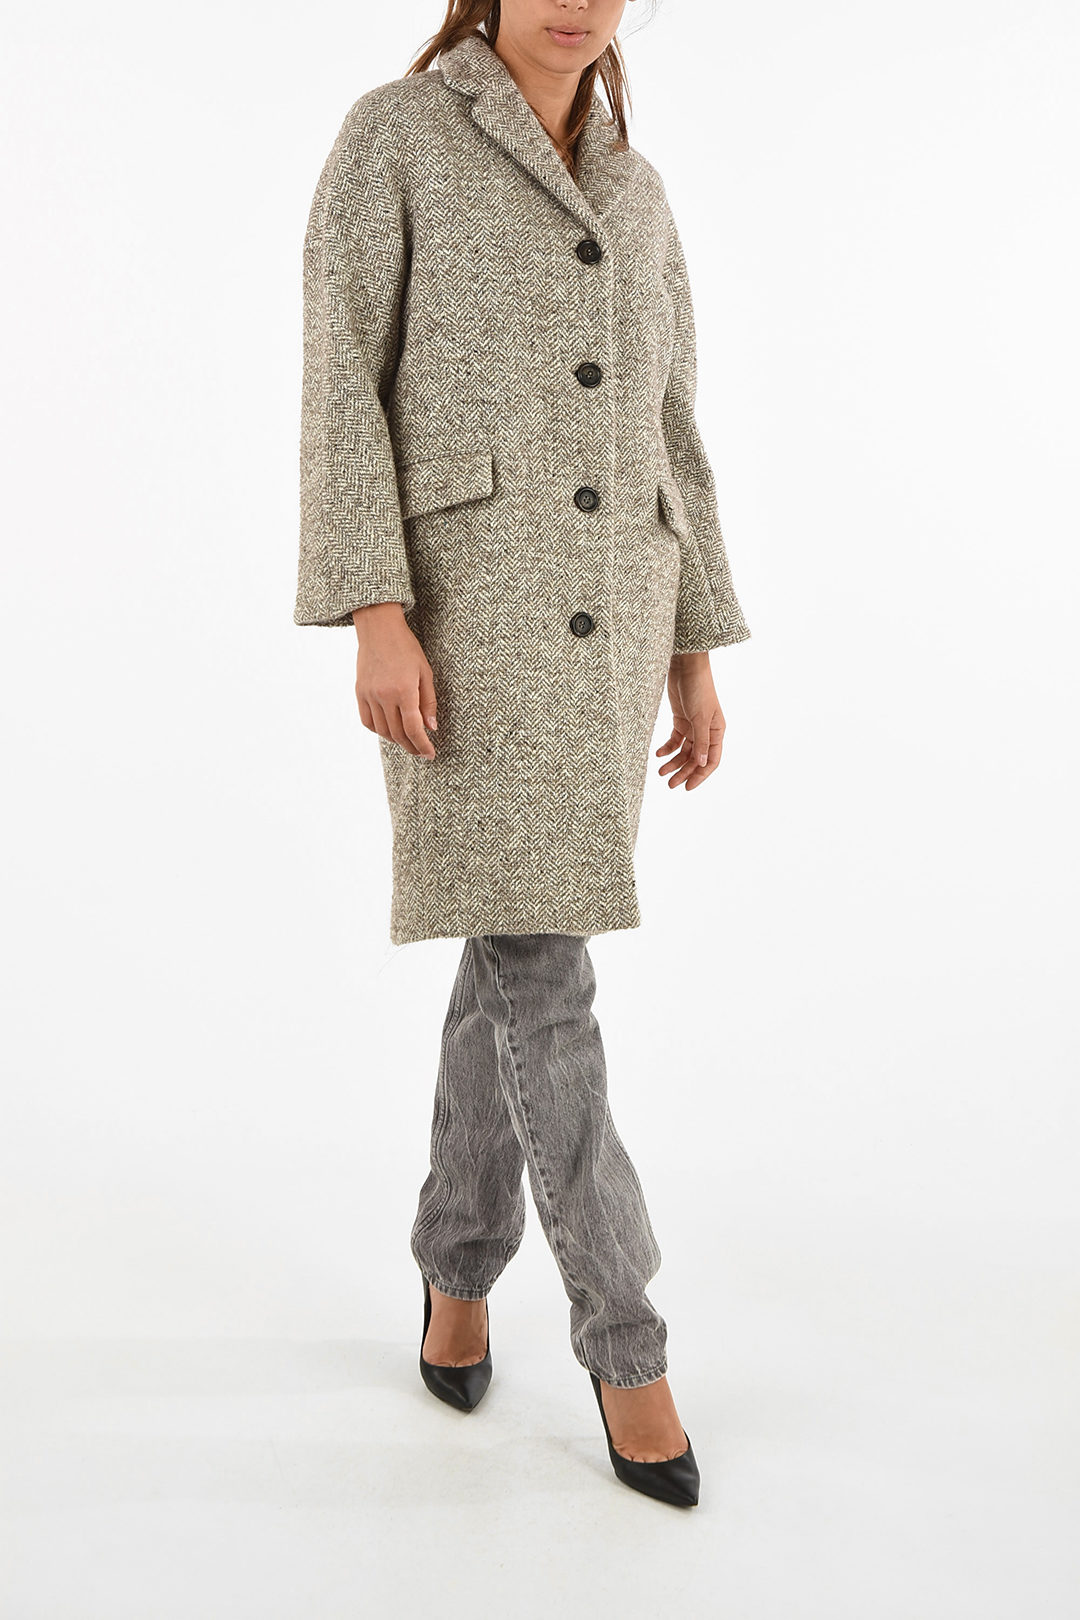 Aspesi plain herringbone chesterfield coat women - Glamood Outlet